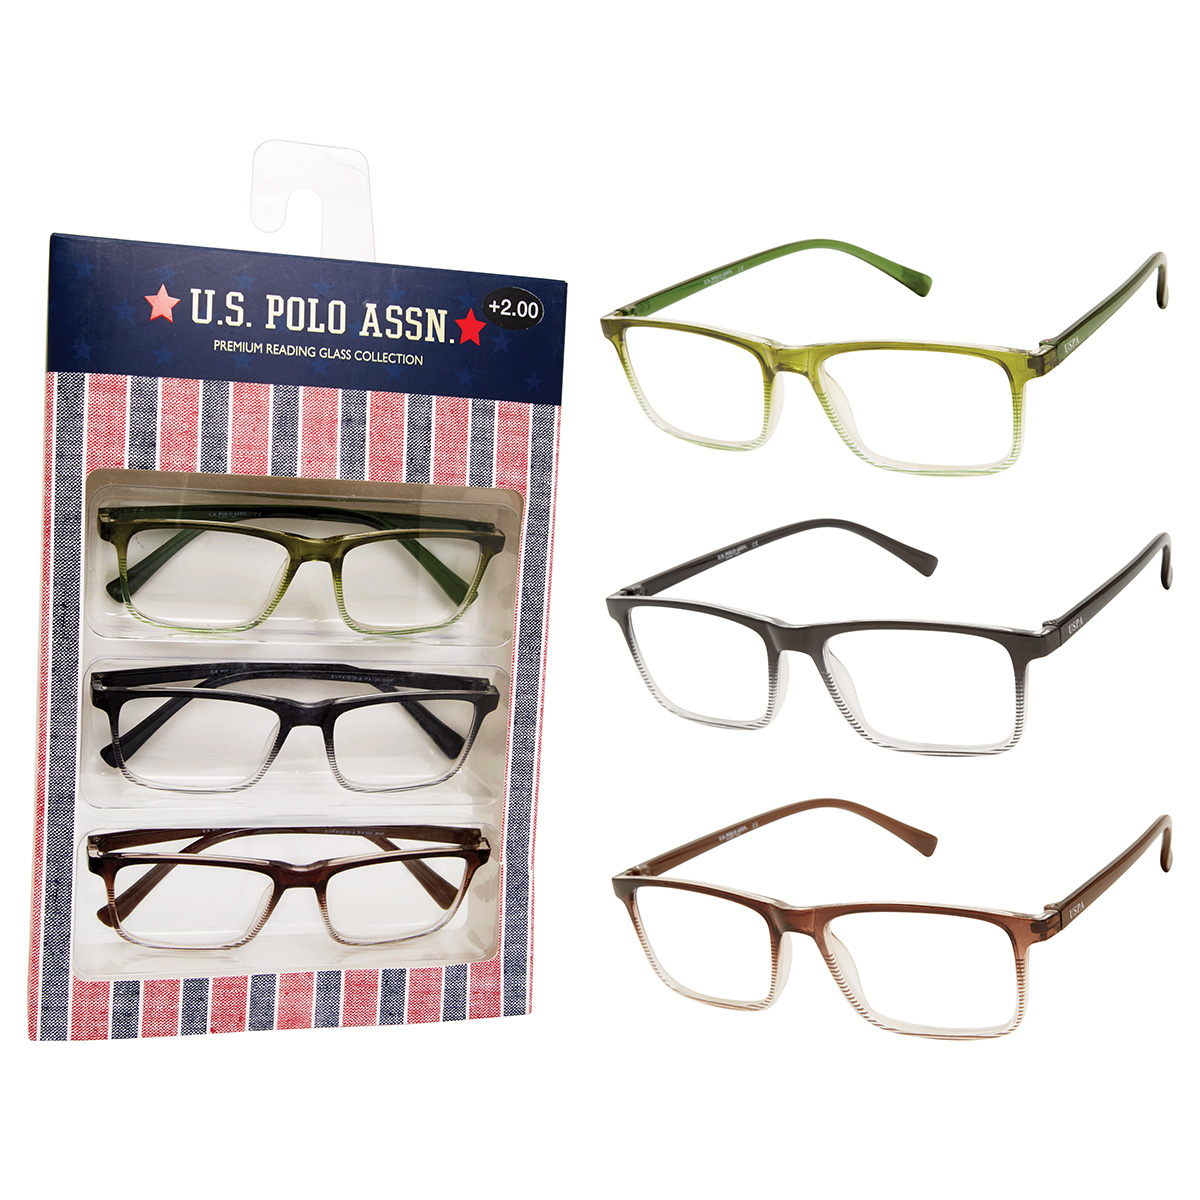 Mens U.S. Polo Assn.(R) 3pk. Reader Glasses Set